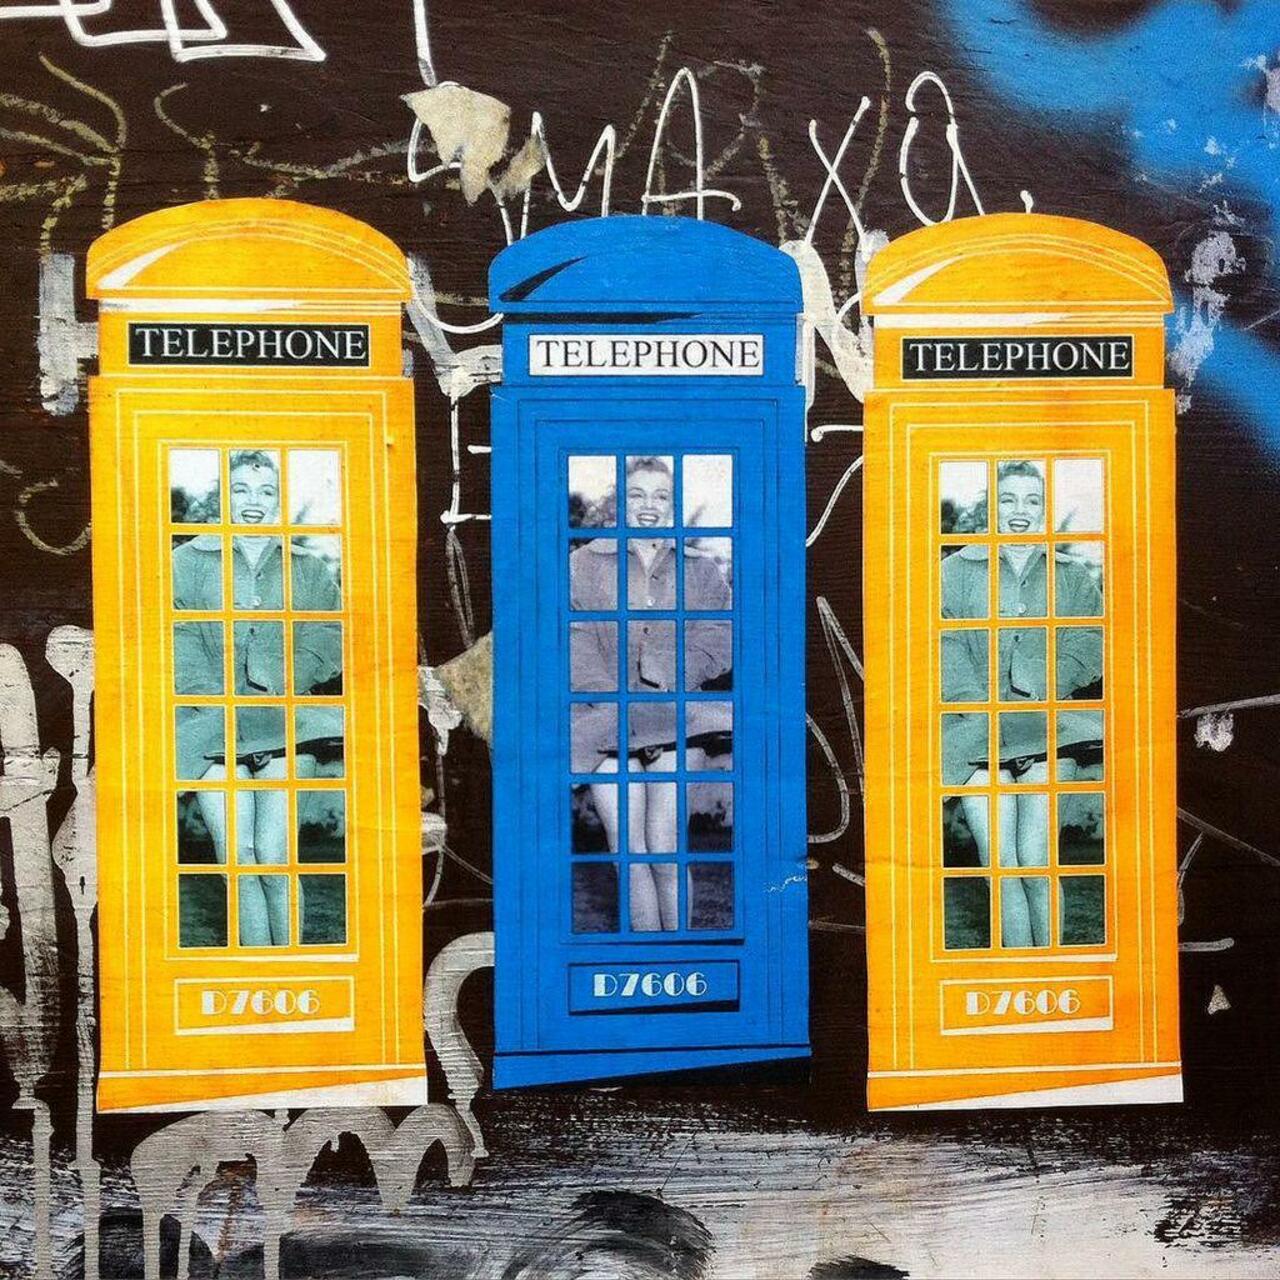 #MarilynMonroe #telephone #pastedup by #d7606 @d7606art #d7606art #streetart #urbanart #graffiti #streetartberlin #… http://t.co/fzvEqgihaI